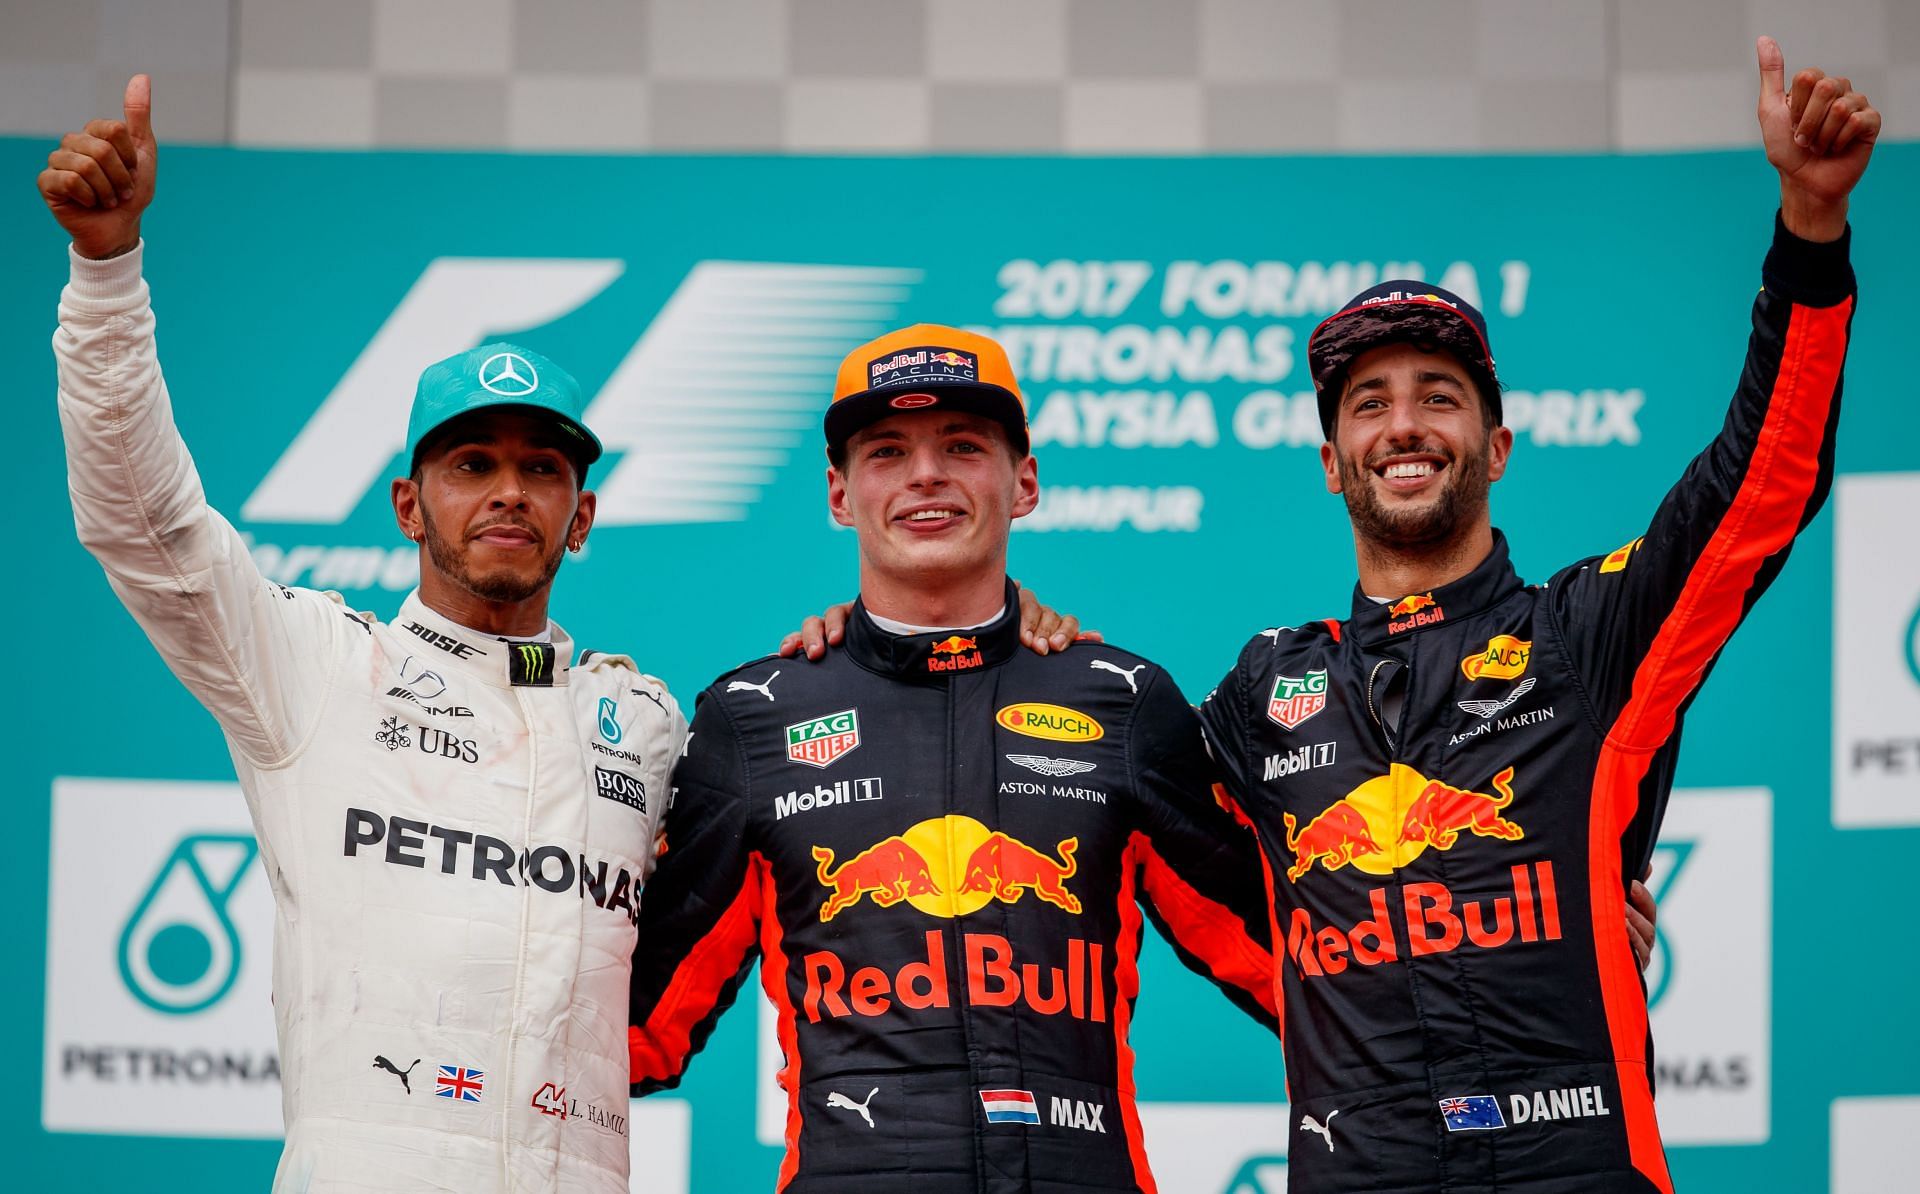 Lewis Hamilton (left), Max Verstappen (center), and Daniel Ricciardo (right) together on the podium at the 2017 Malaysian Grand Prix